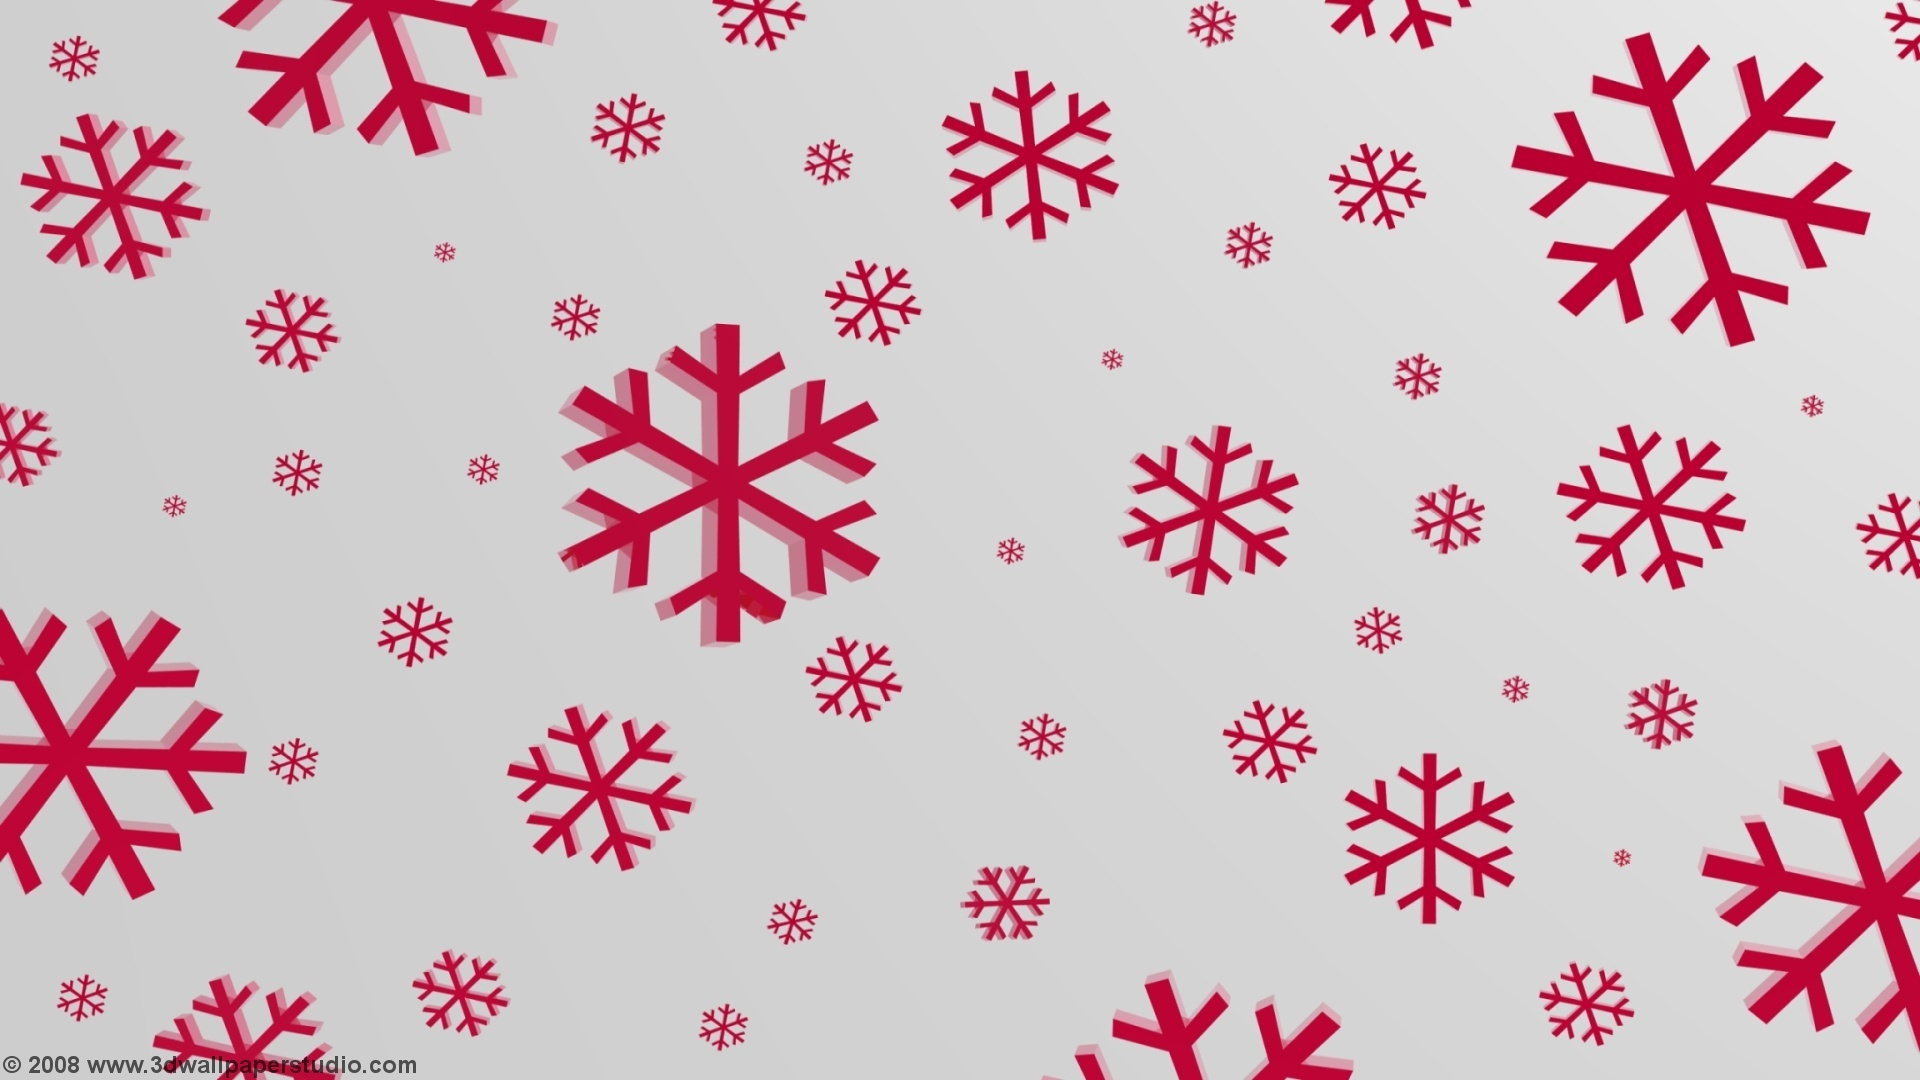 1920x1080 Free download wallpaper snowflakes definition wallpapers snowflake desktop [] for your Desktop, Mobile \u0026 Tablet | Explore 42+ Snowflake Wallpaper Images | Snowflake Wallpaper Free, Snowflake Wallpaper for Walls